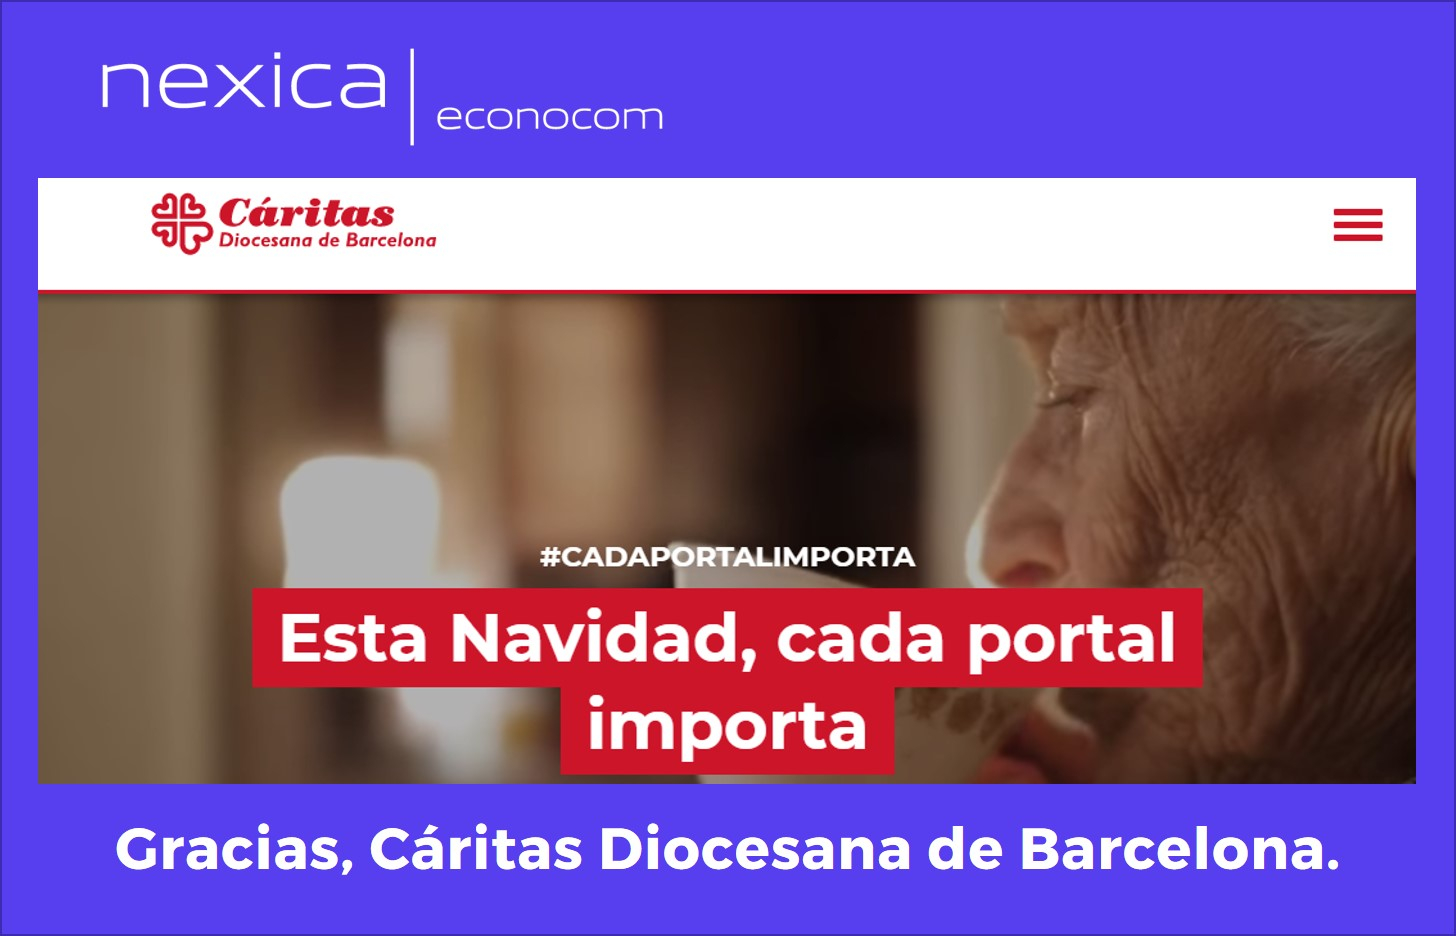 Econocom Nexica col·labora amb Càritas BarcelonaEconocom Nexica, with Càritas Barcelona